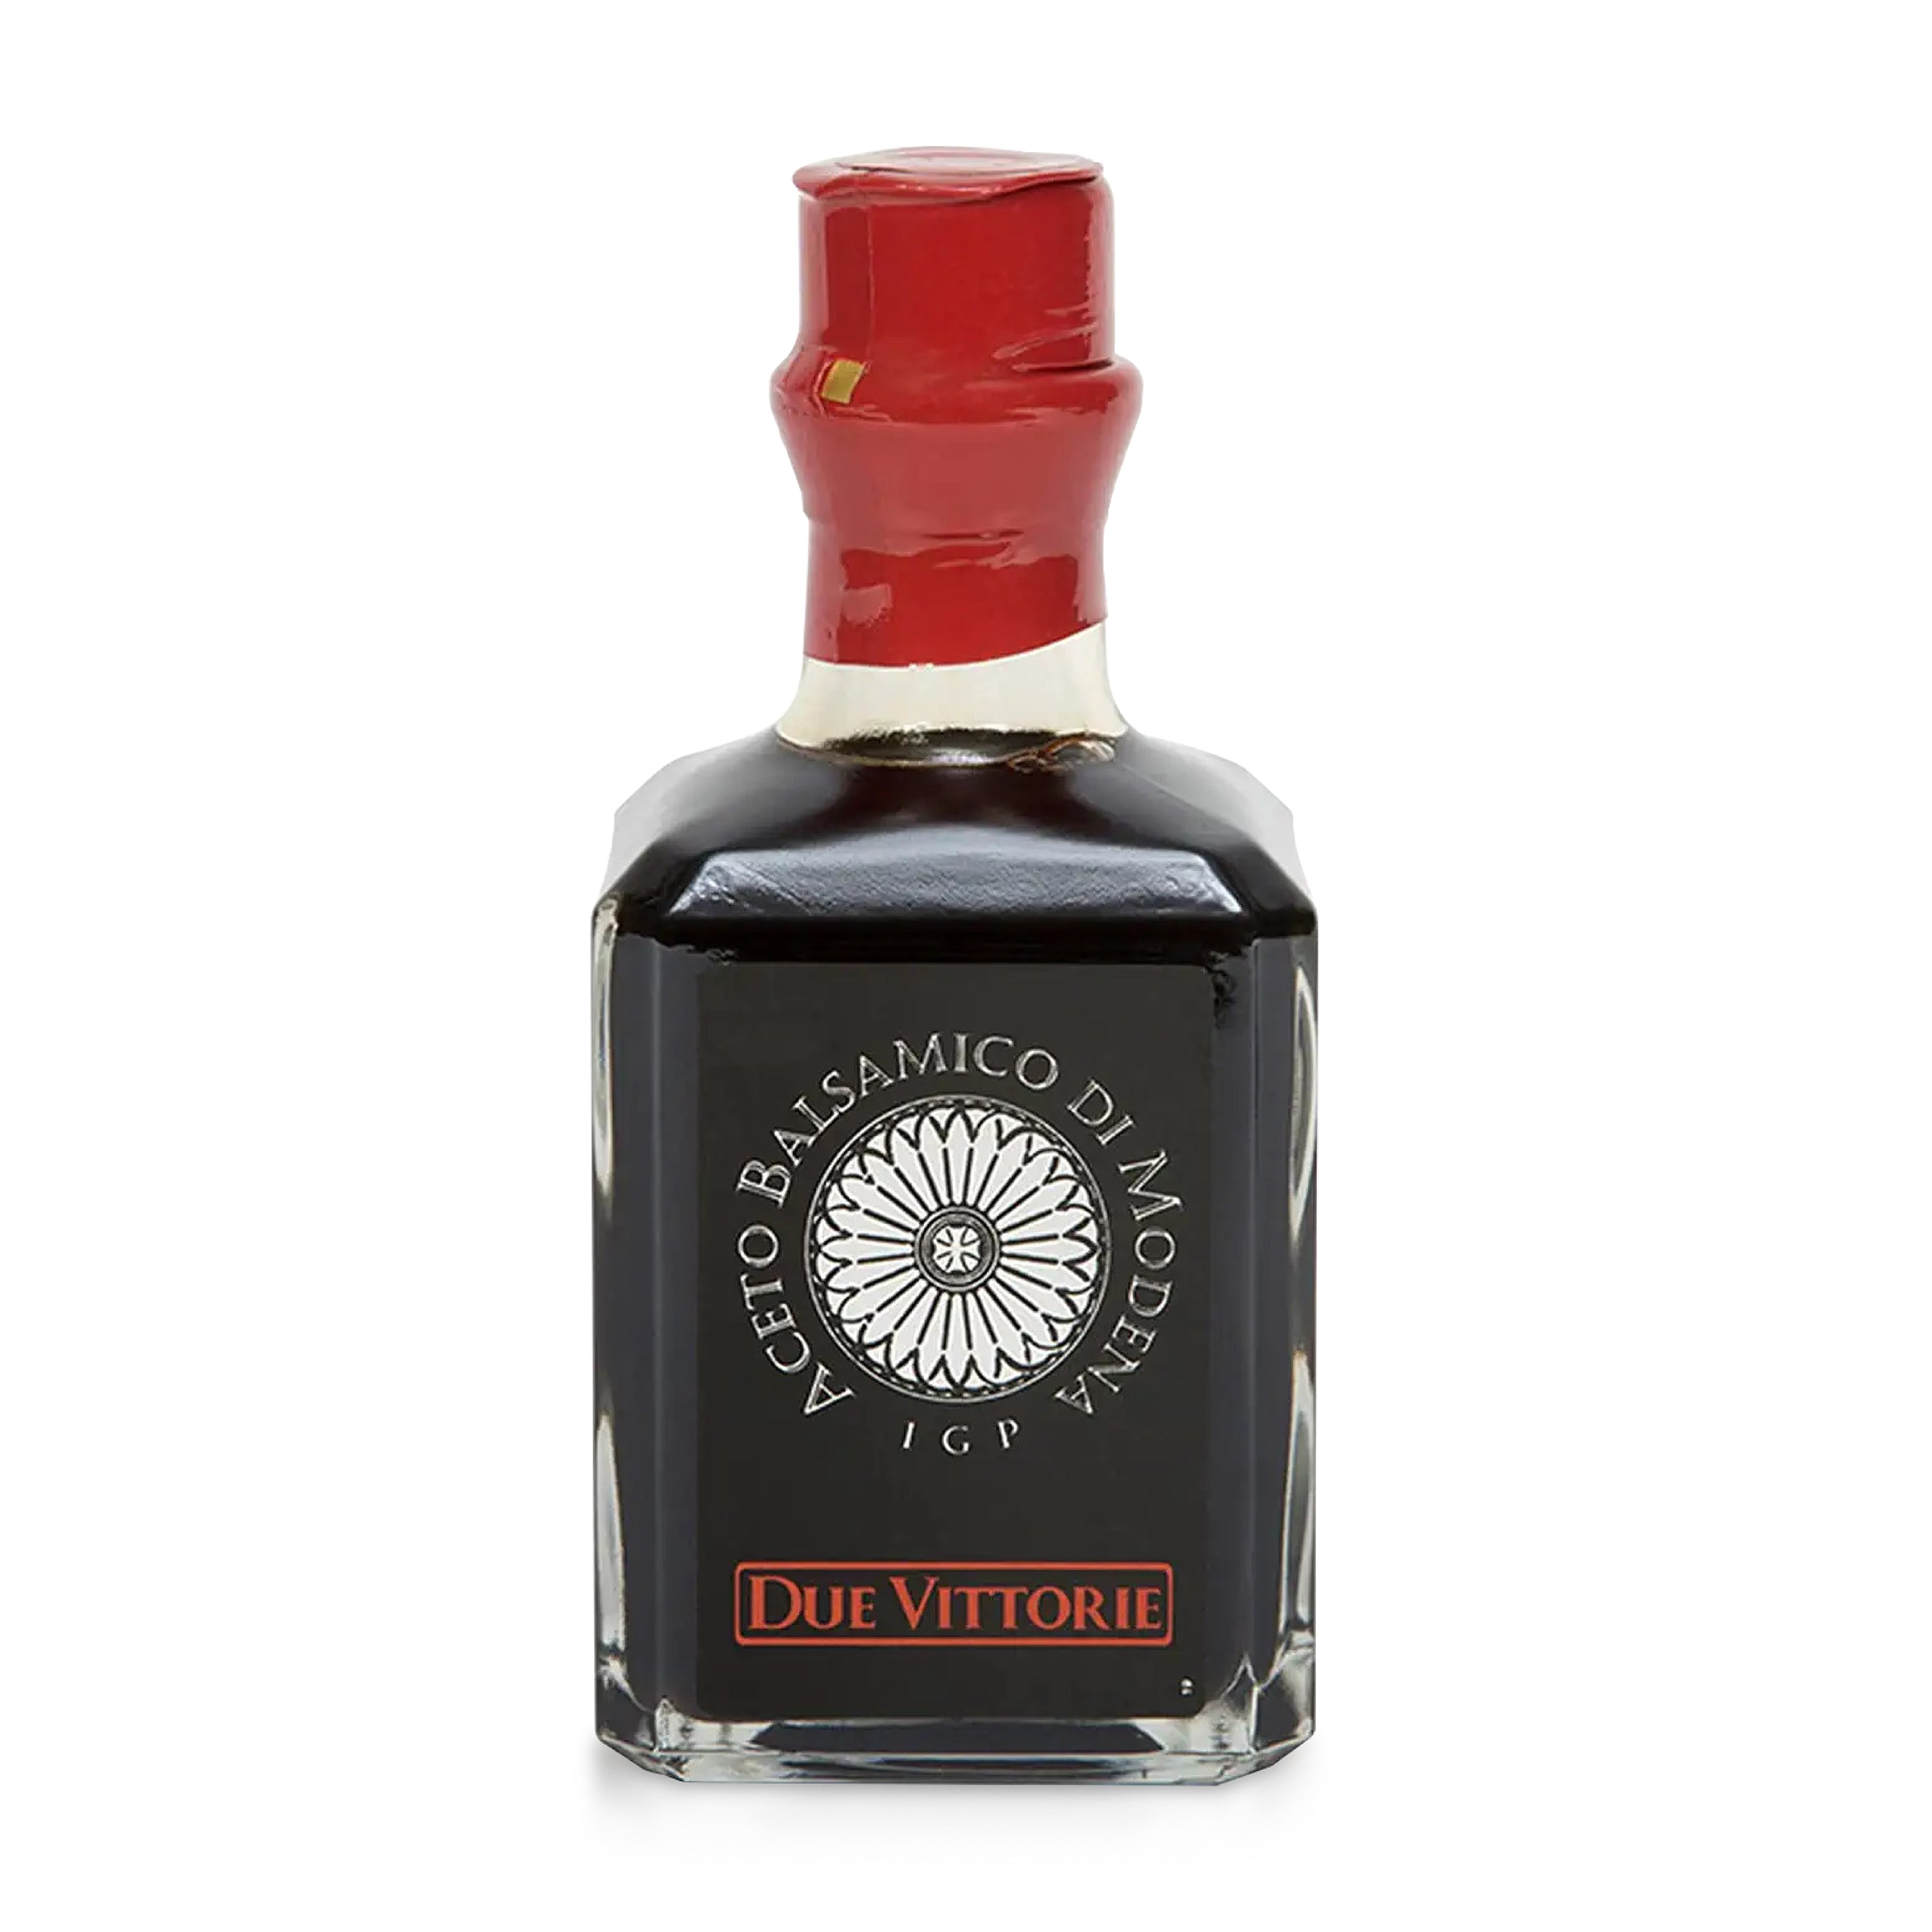 Due Vittorie Argento Balsamic Vinegar of Modena IGP 250ml